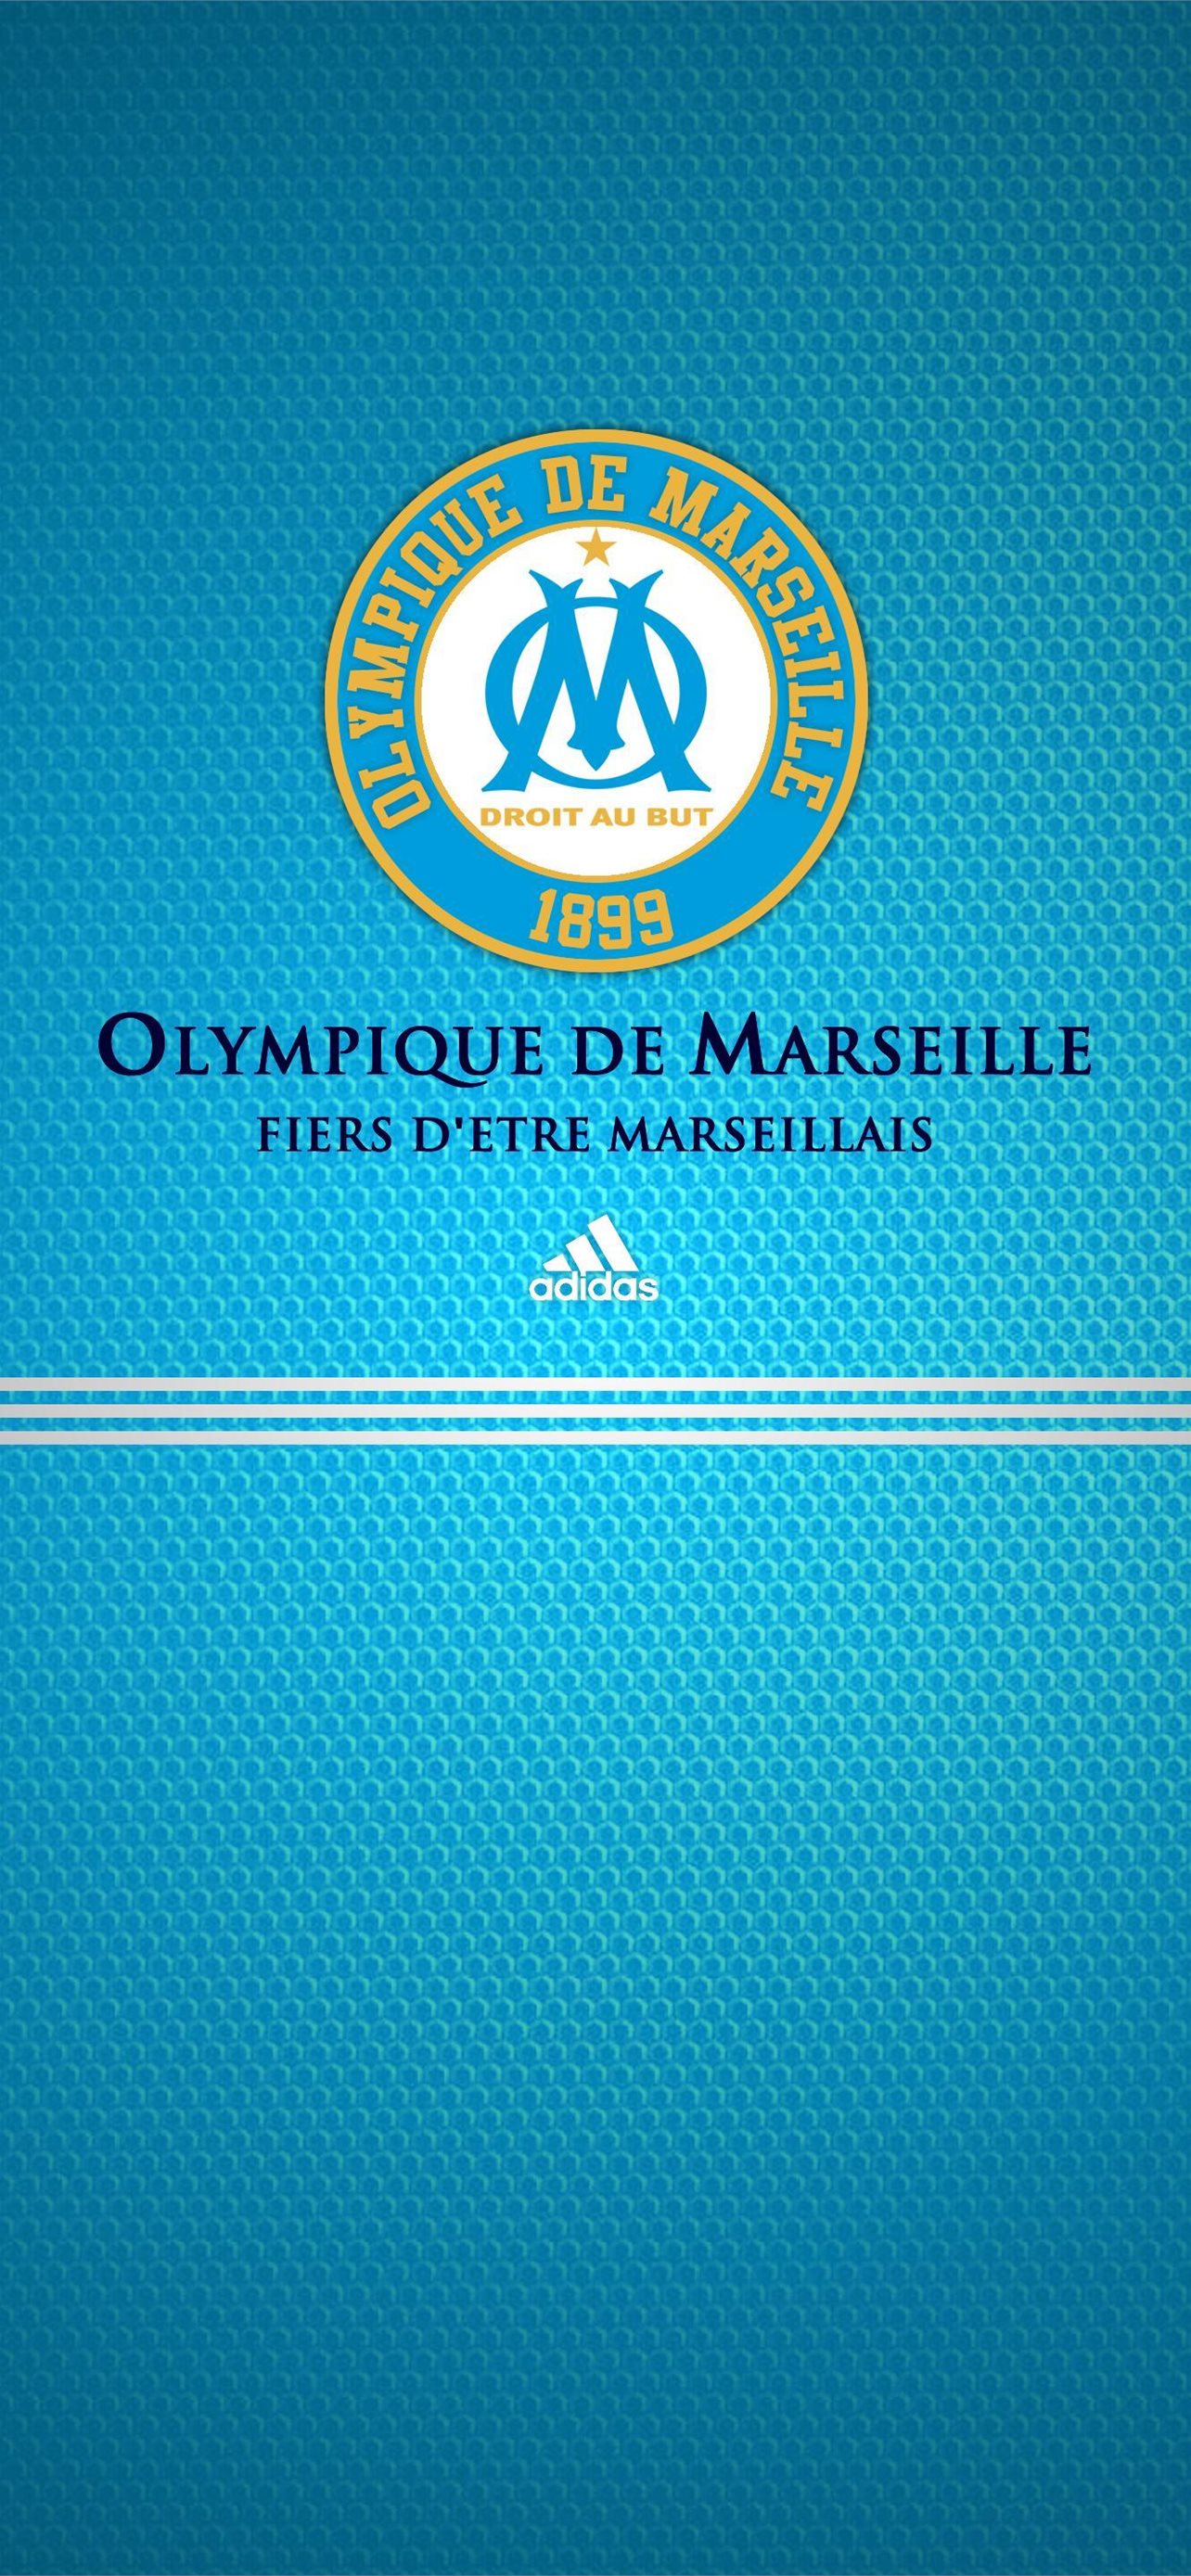 Olympique de Marseille   on Twitter New pumafootball  wallpaper   NewLevels  NewMarseille httpstcoAZ3Ioqi0MM  Twitter